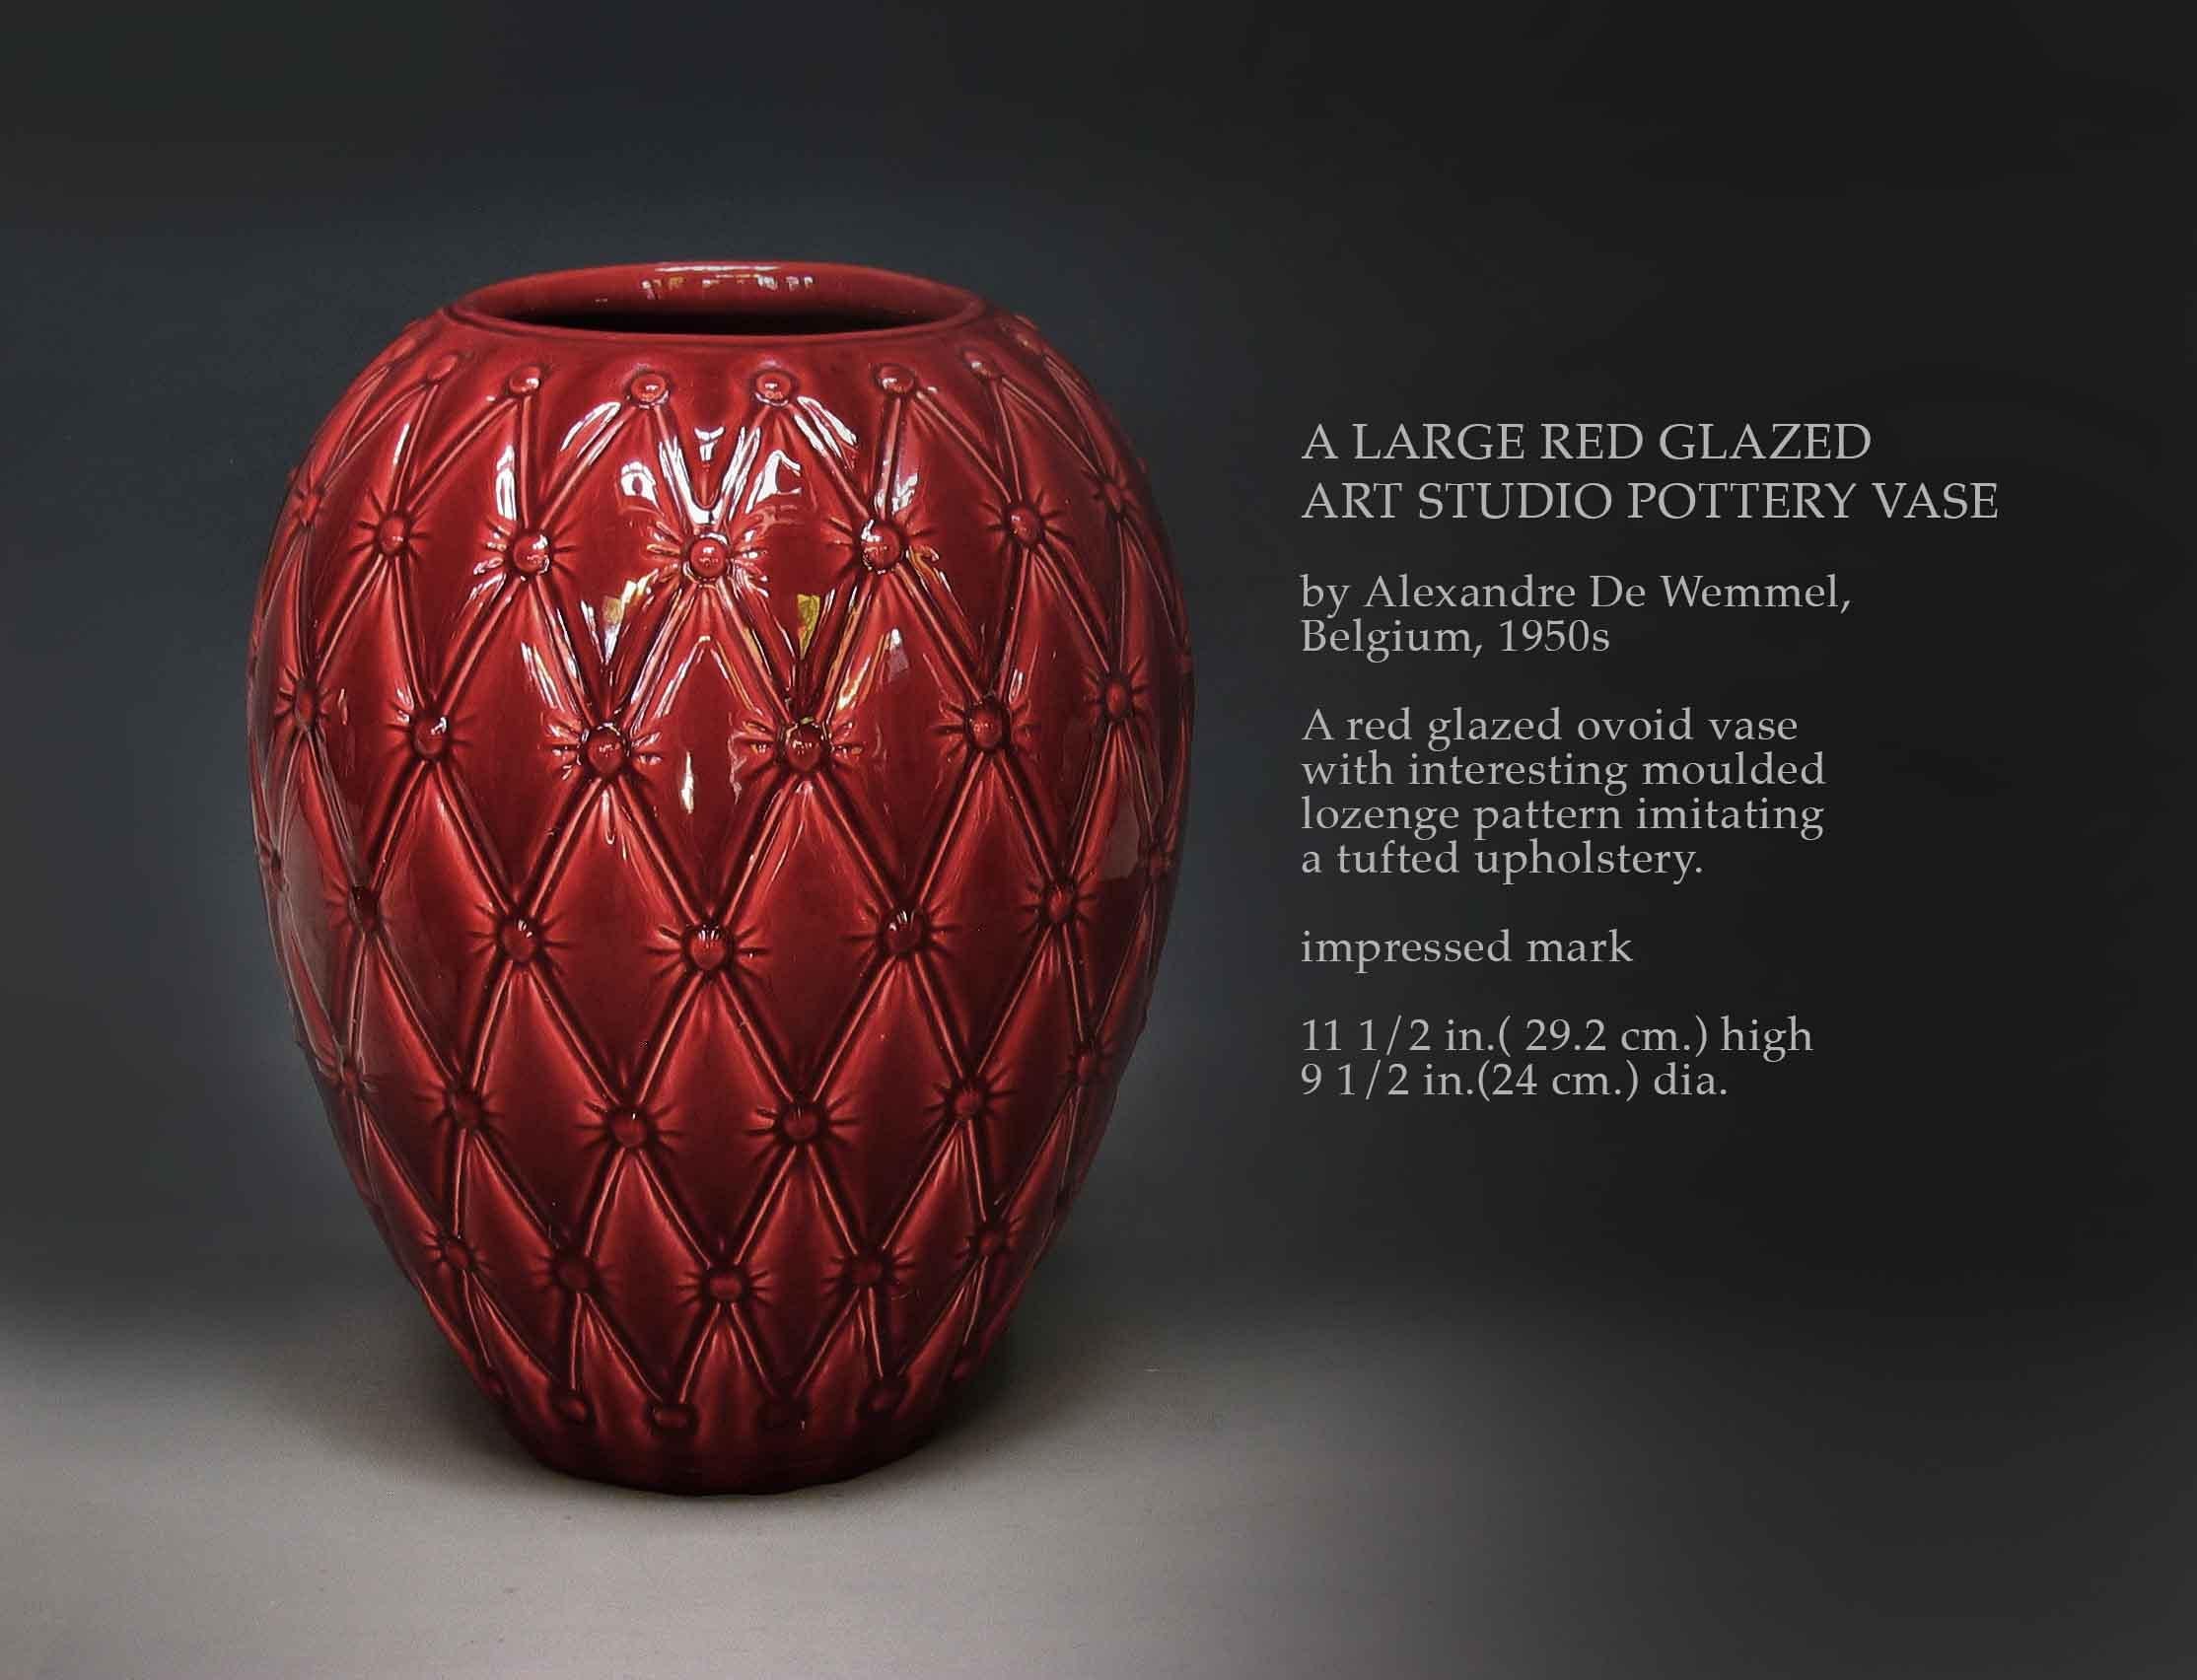 A LARGE RED GLAZED
ART STUDIO POTTERY VASE

By Alexandre De Wemmel,
Belgium, 1950's.

A red glazed ovoid vase
with interesting moulded
lozenge pattern imitating
a tufted upholstery.

Impressed mark.

11 1/2